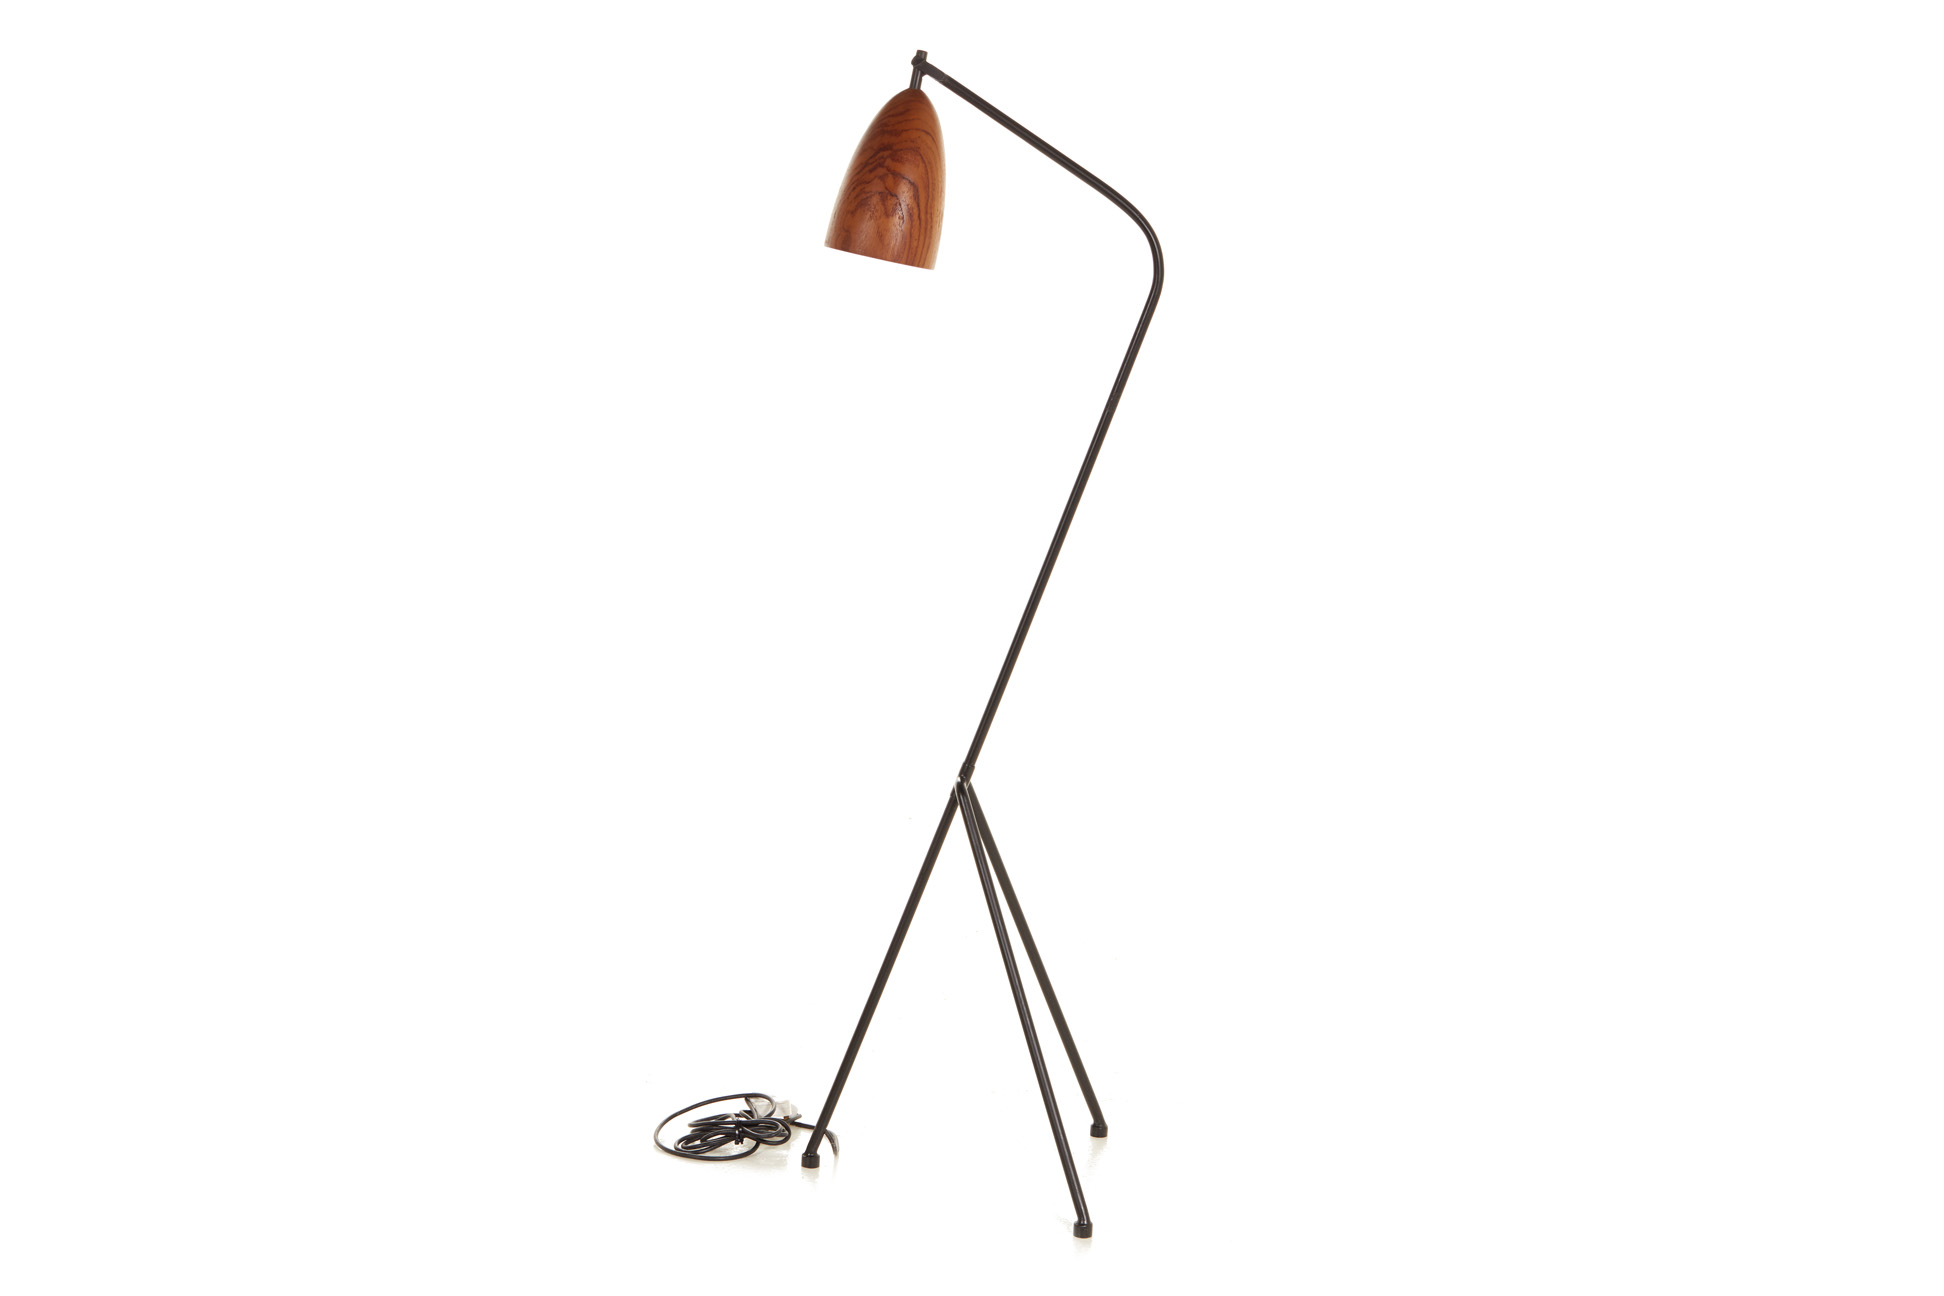 A GRETA MAGNUSSON STYLE 'GRASSHOPPER' FLOOR LAMP